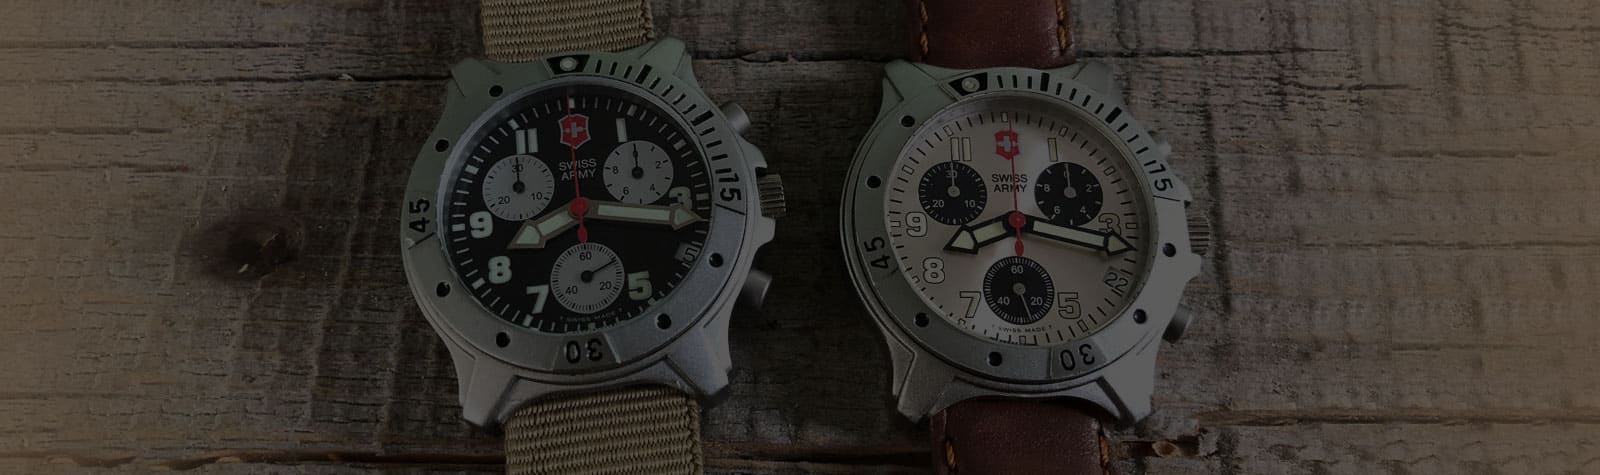 MEET THE WATCH: Victorinox Swiss Army Centurion Chronograph